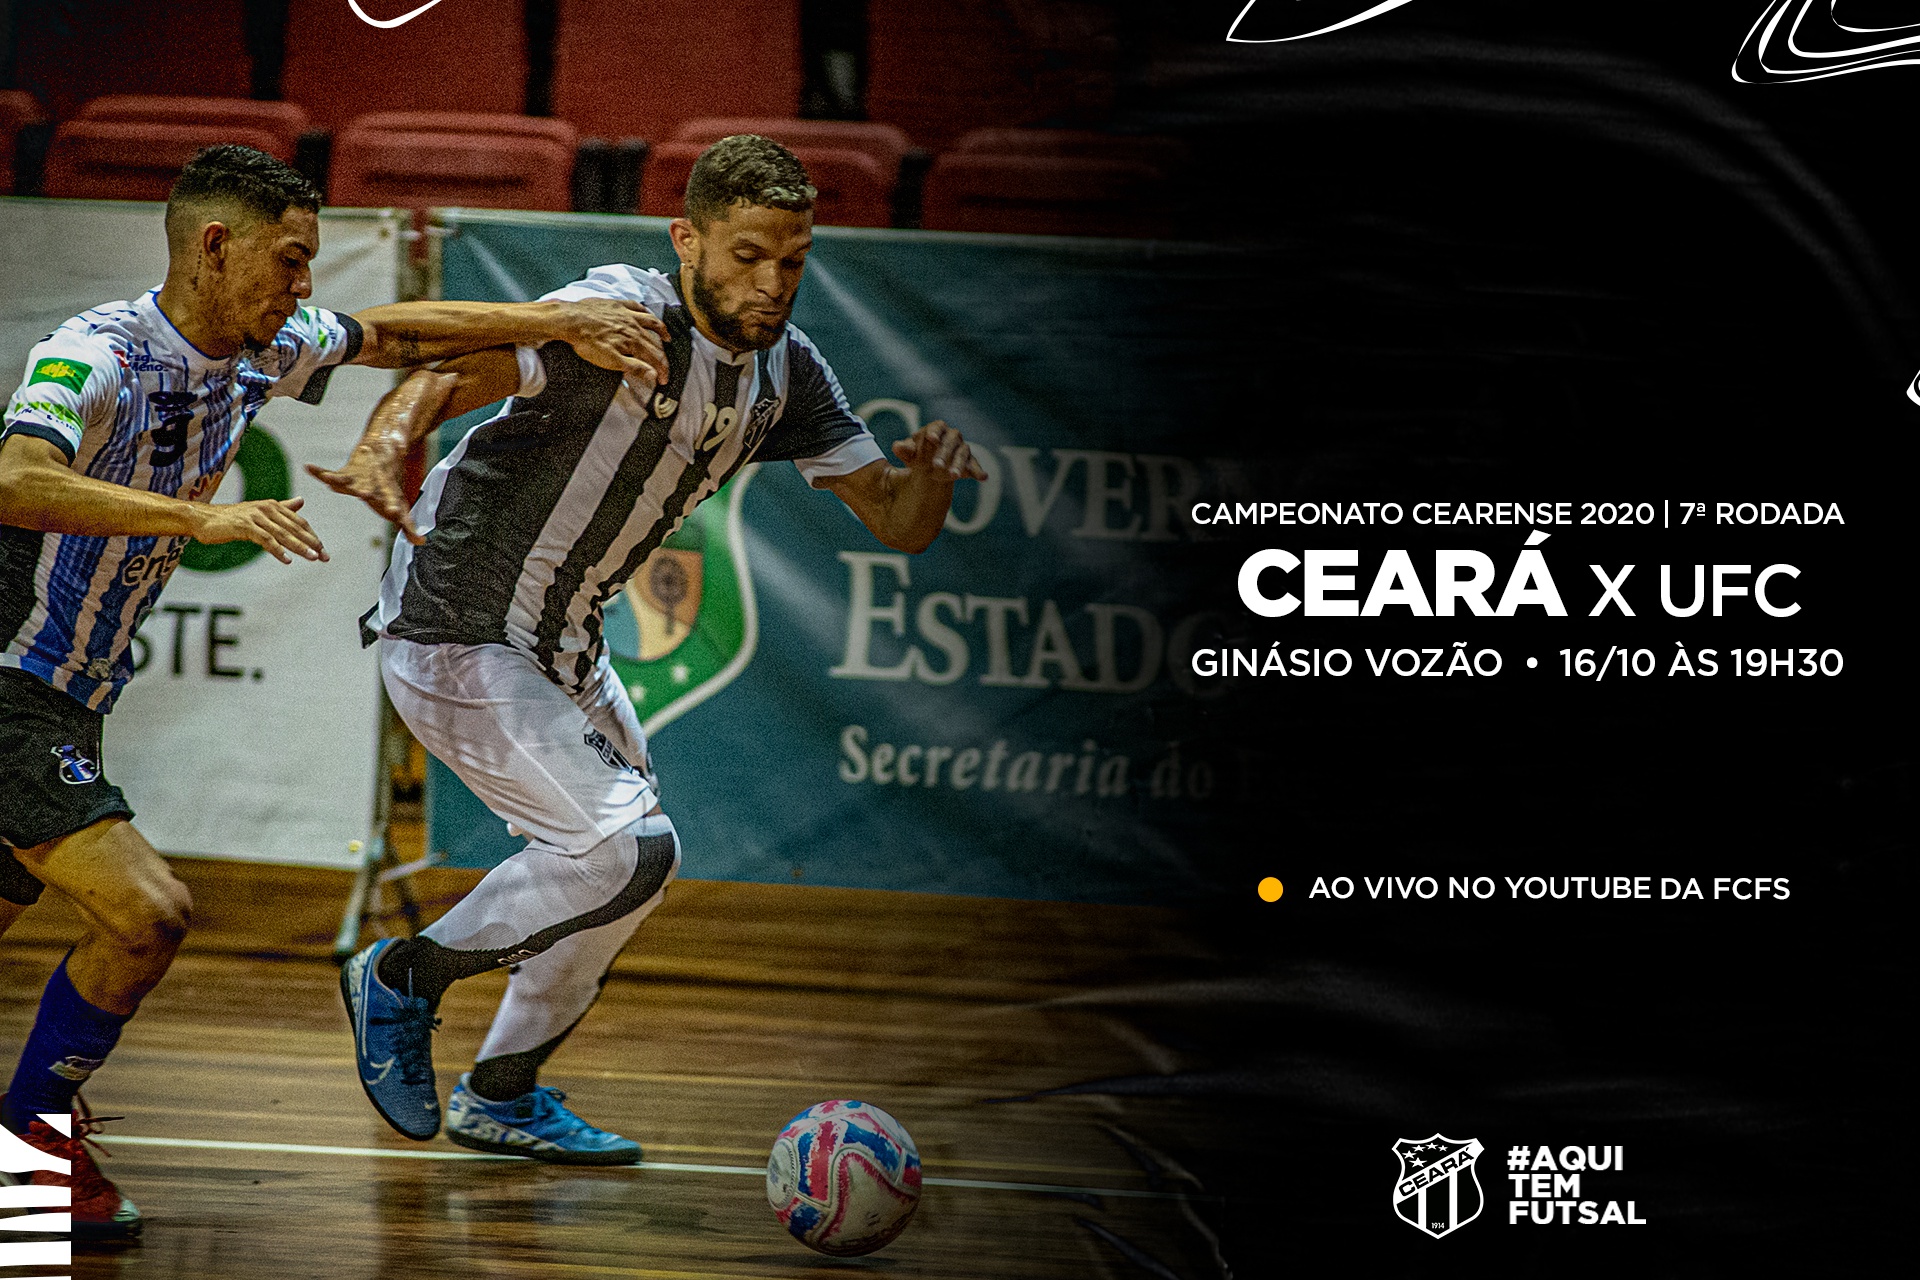 Futsal adulto: Líder de seu grupo no Campeonato Cearense, Ceará enfrenta, em casa, a UFC